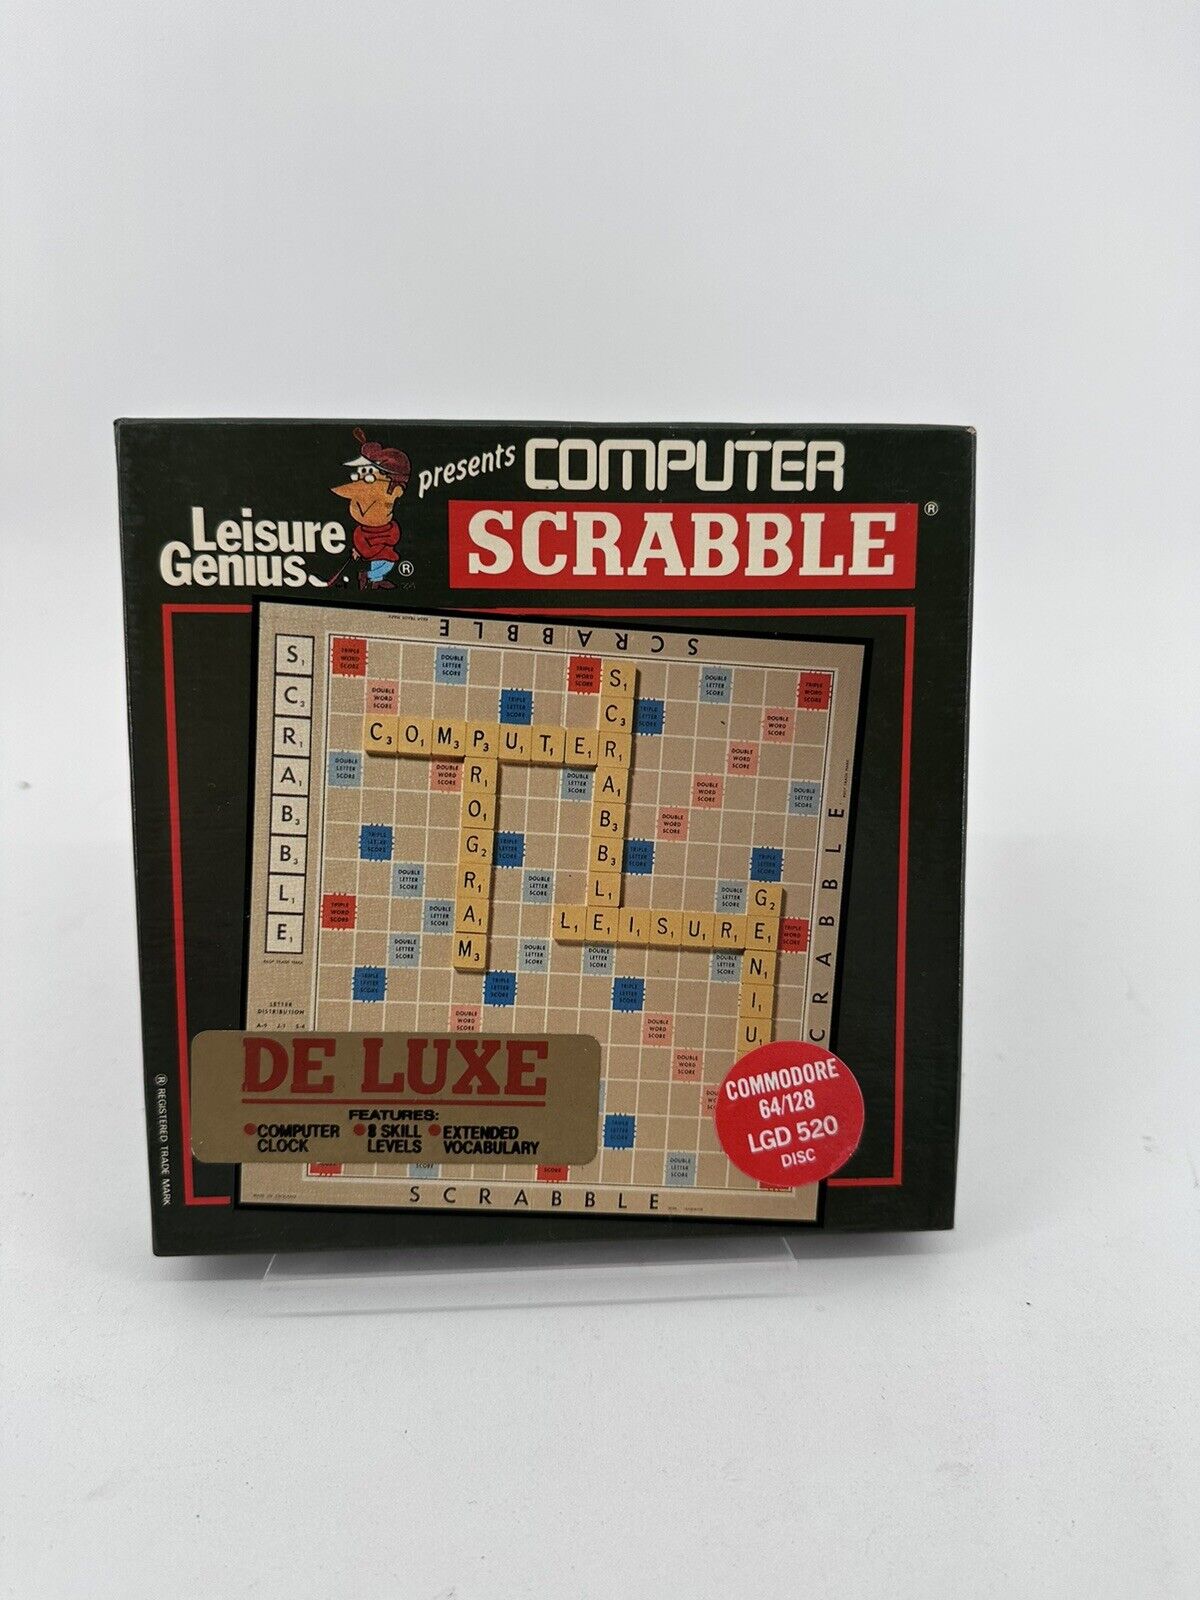 Vintage Commodore 64 Cassette c64 128 Scrabble Computer Game Complete Box Set